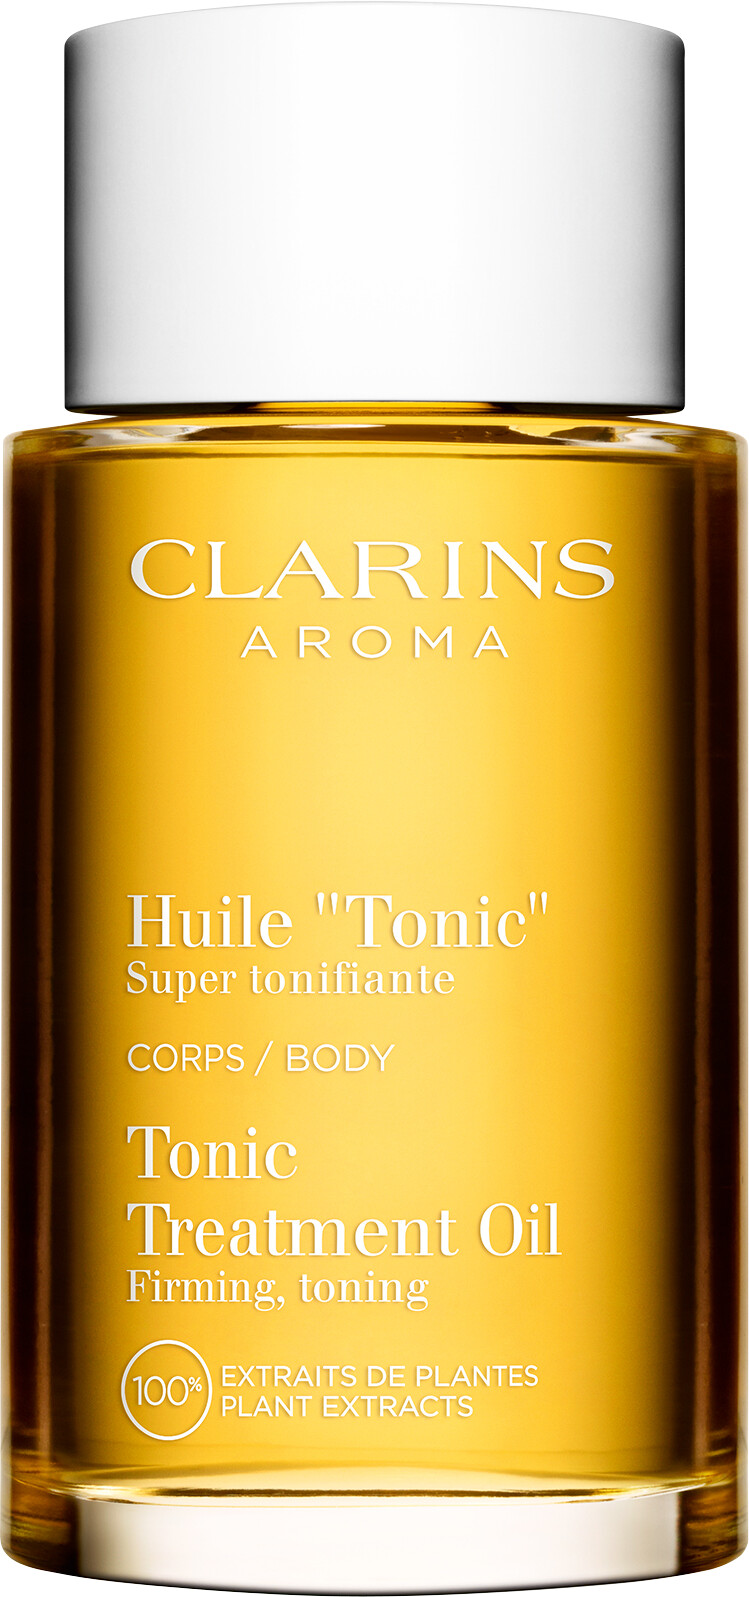 Clarins Tonic Body Treatment Oil 'Firming/Toning' 100ml